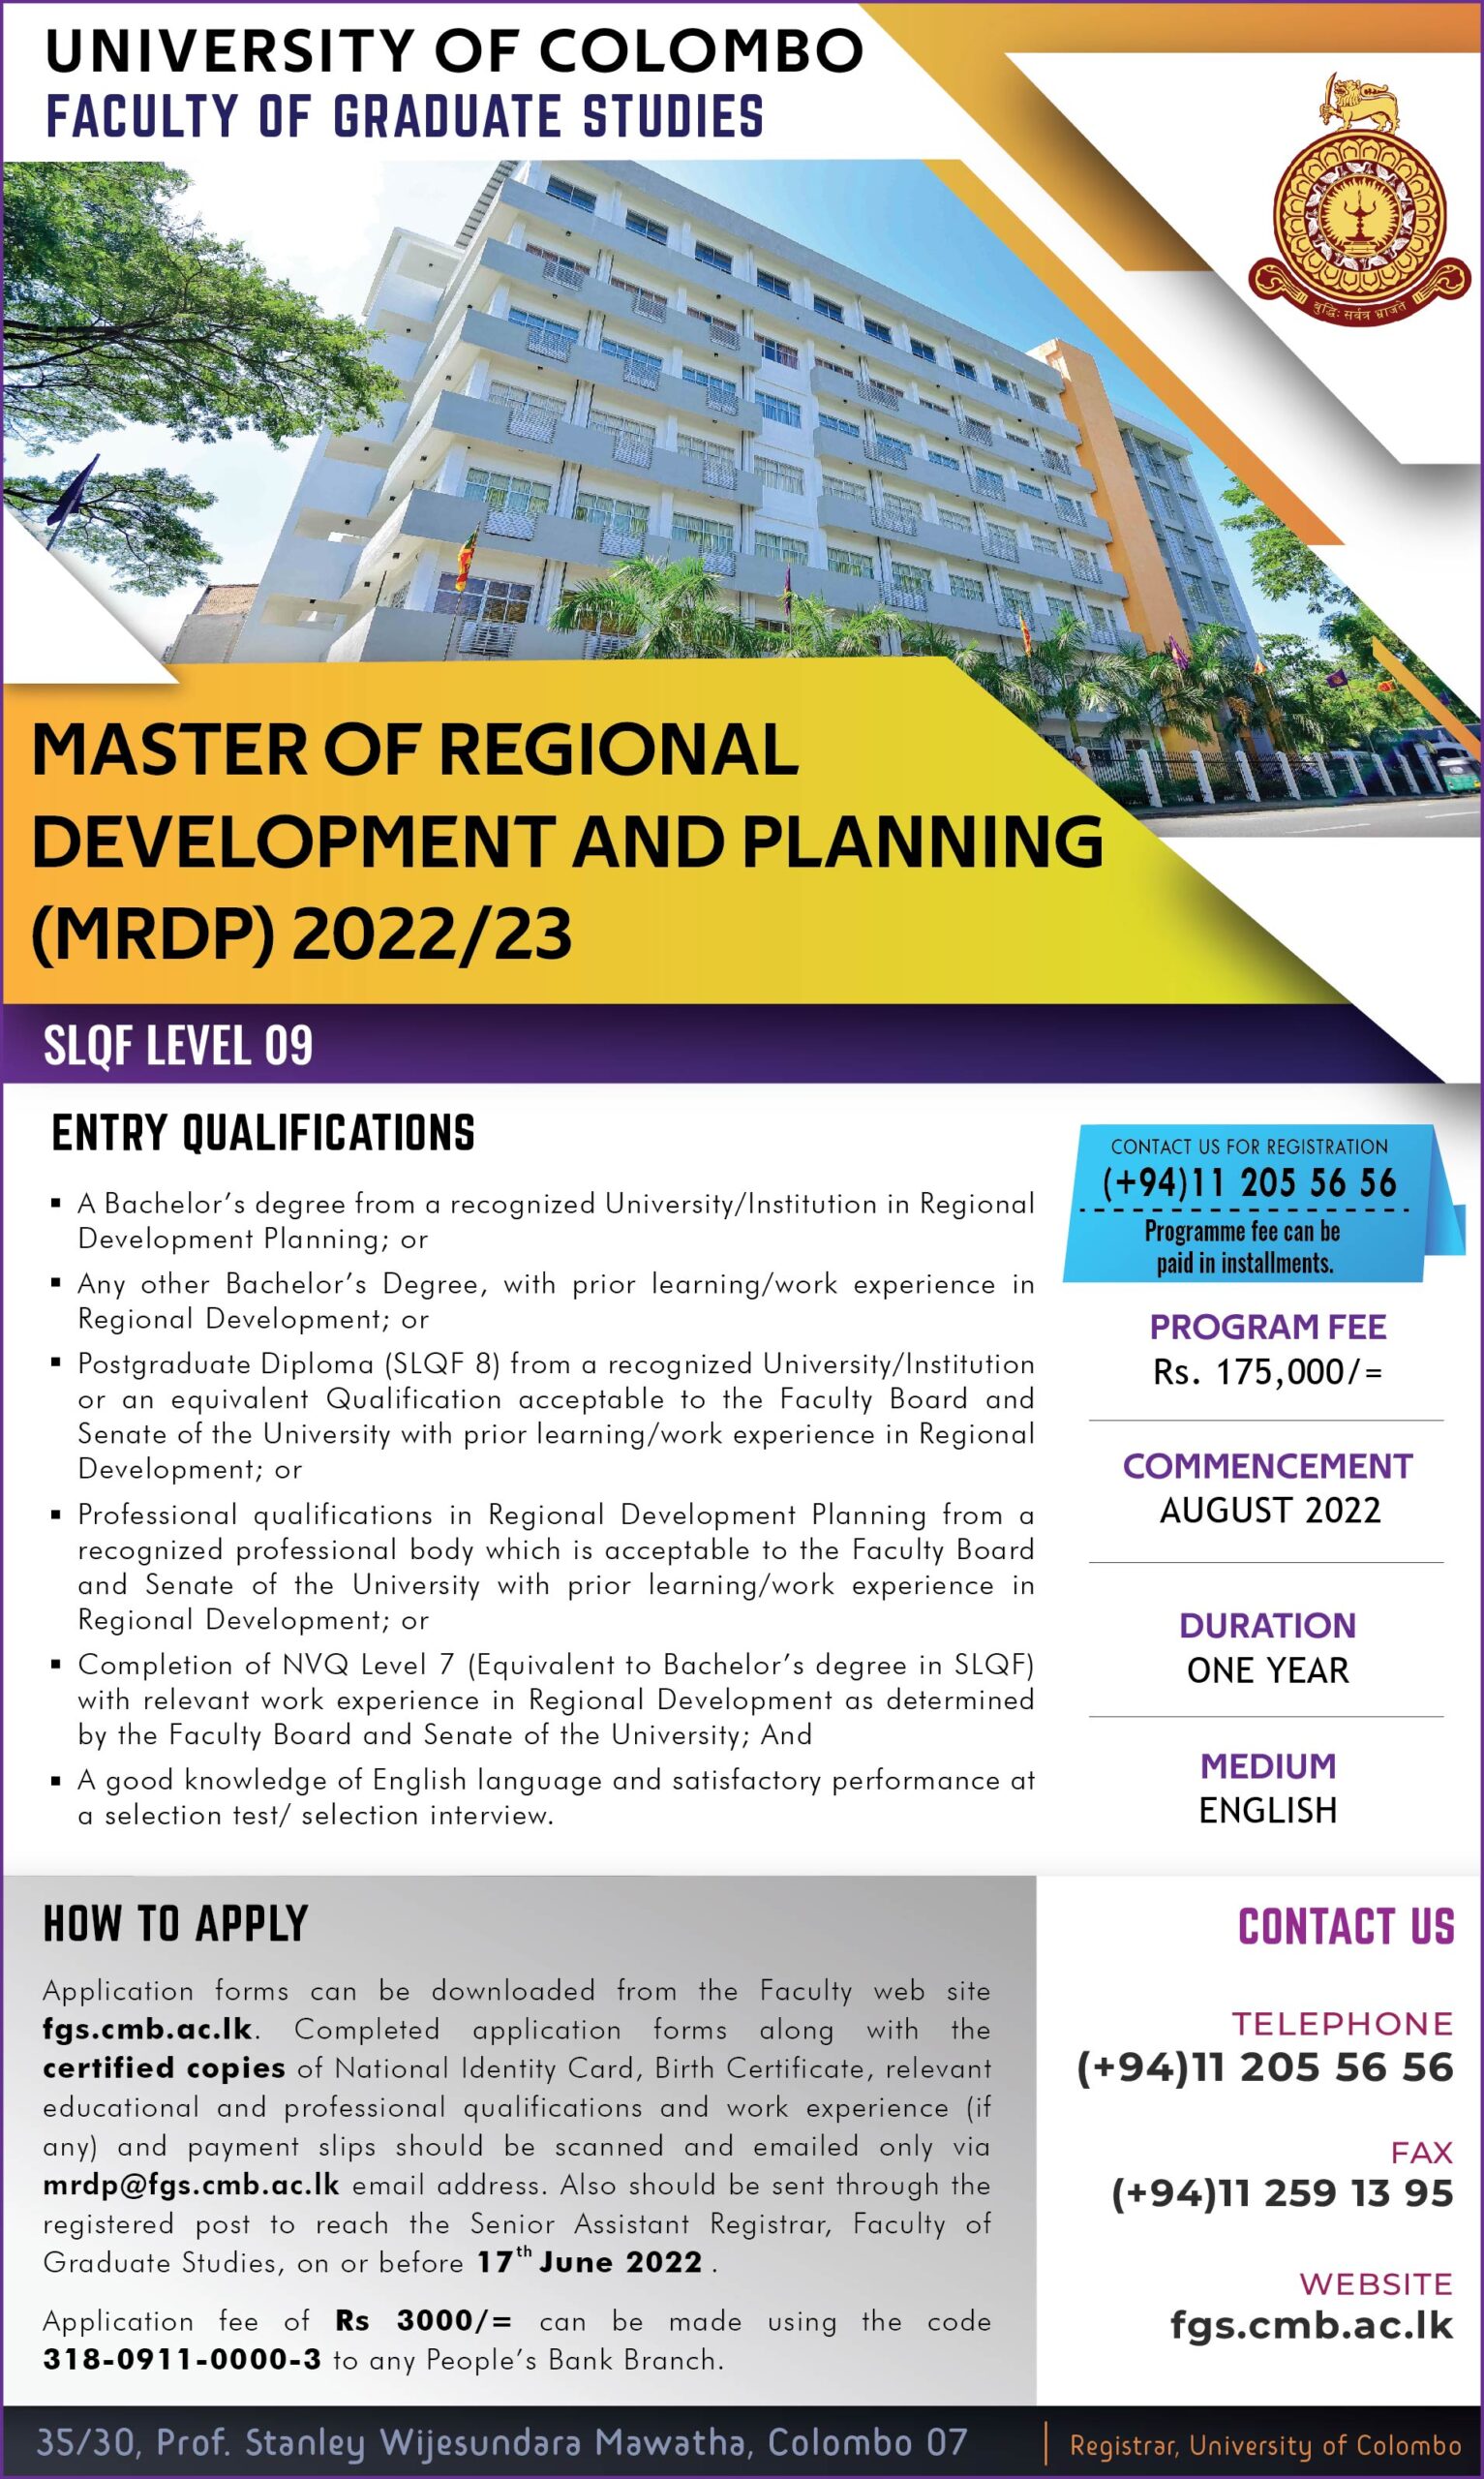 Master of Regional Development and Planning - MRDP 2022/23 - University of Colombo Degree Application